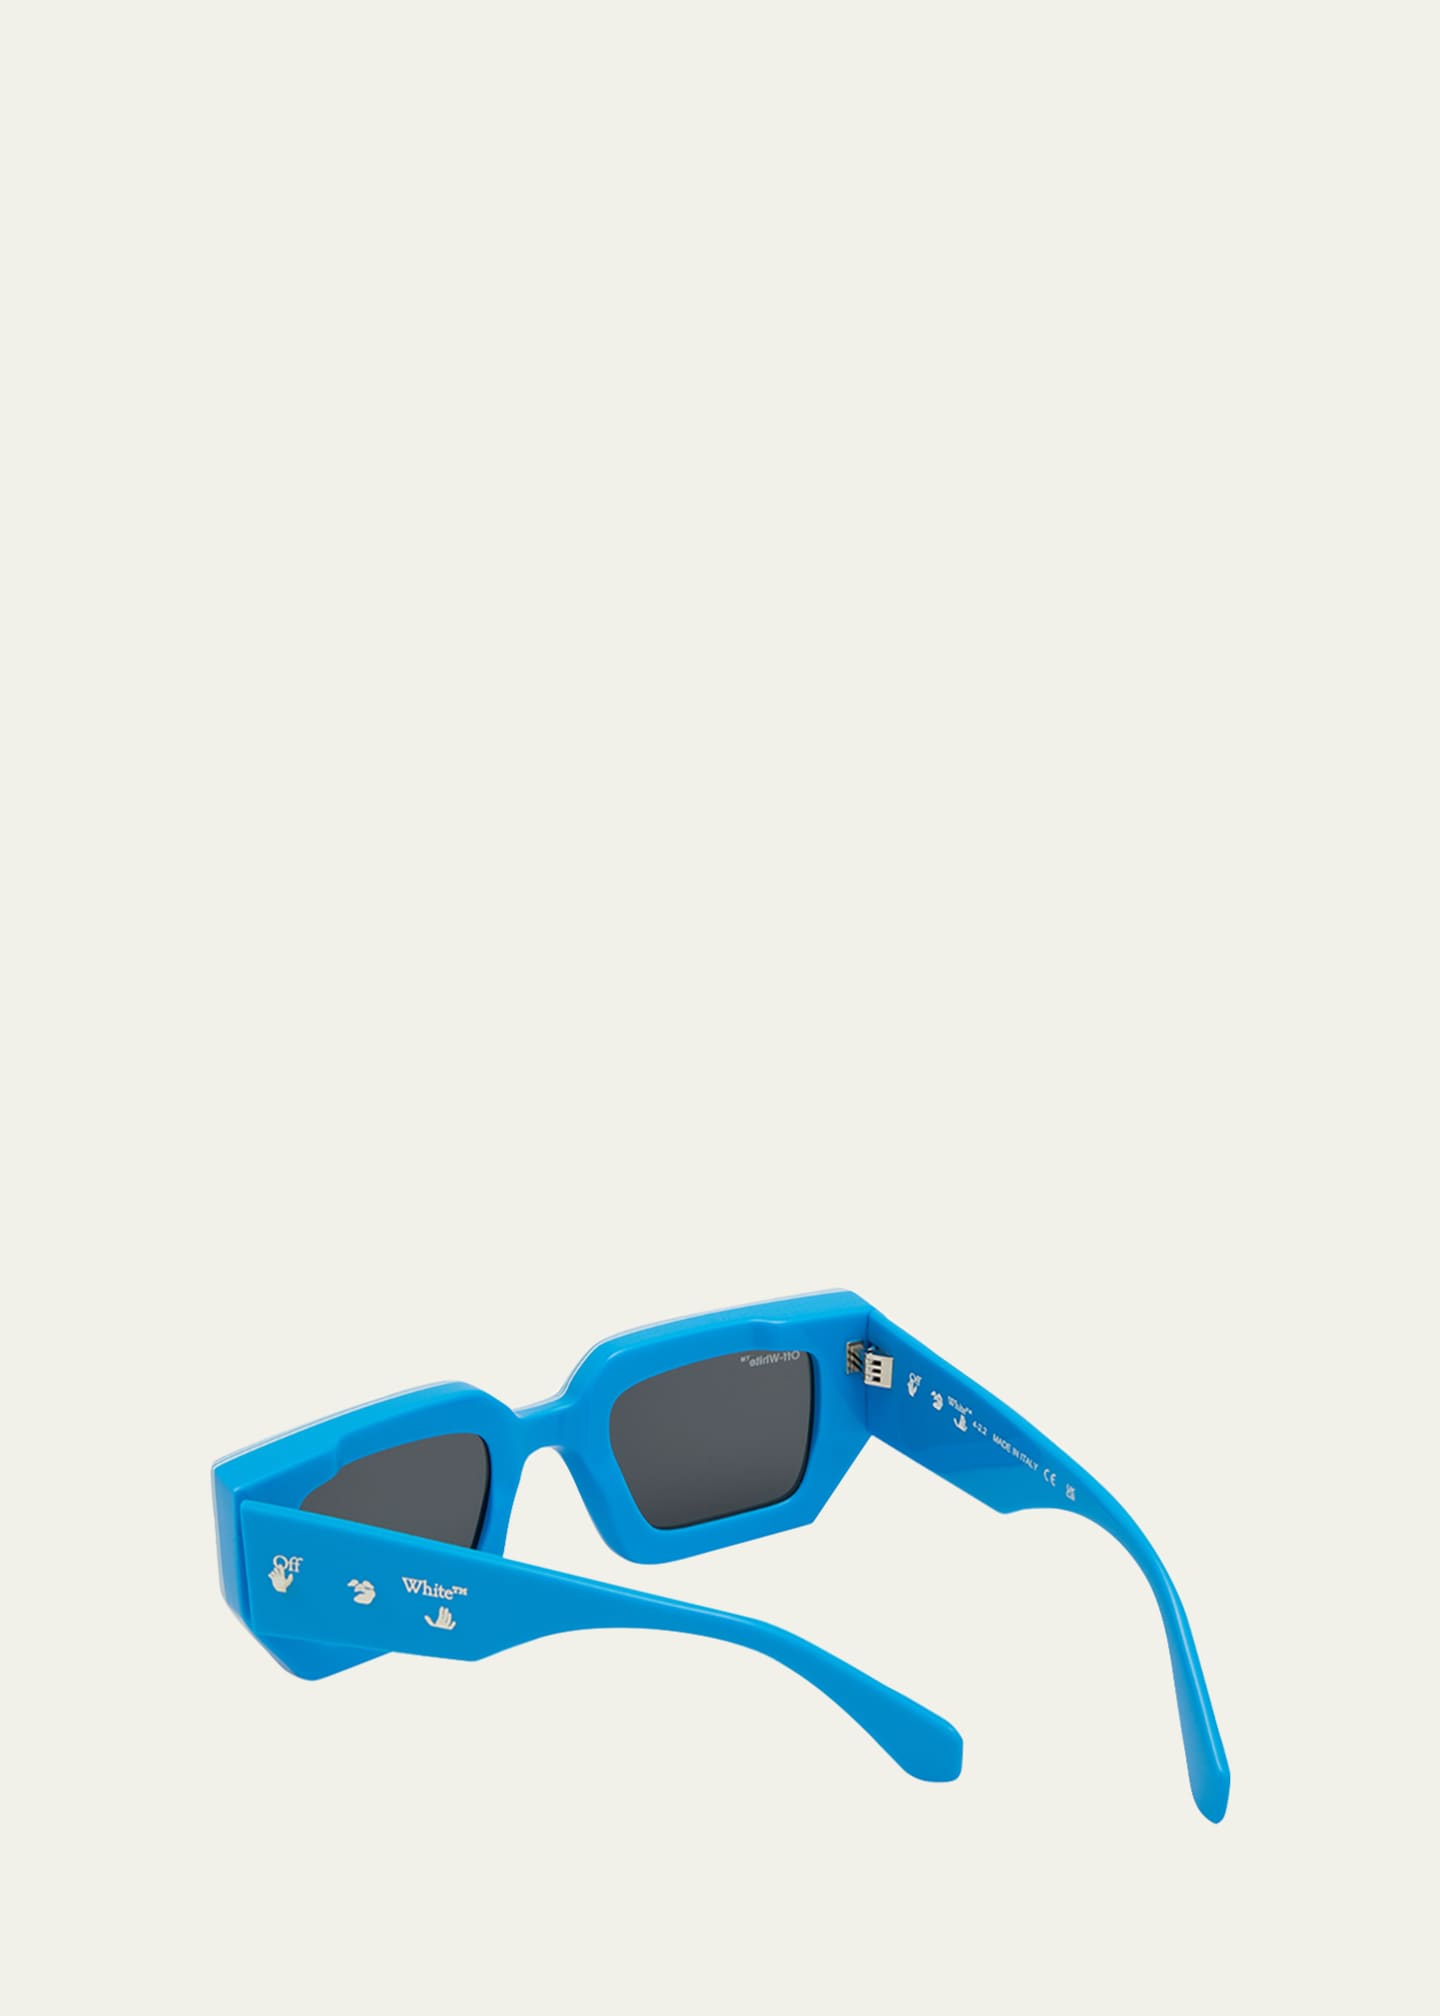 off white sunglasses blue